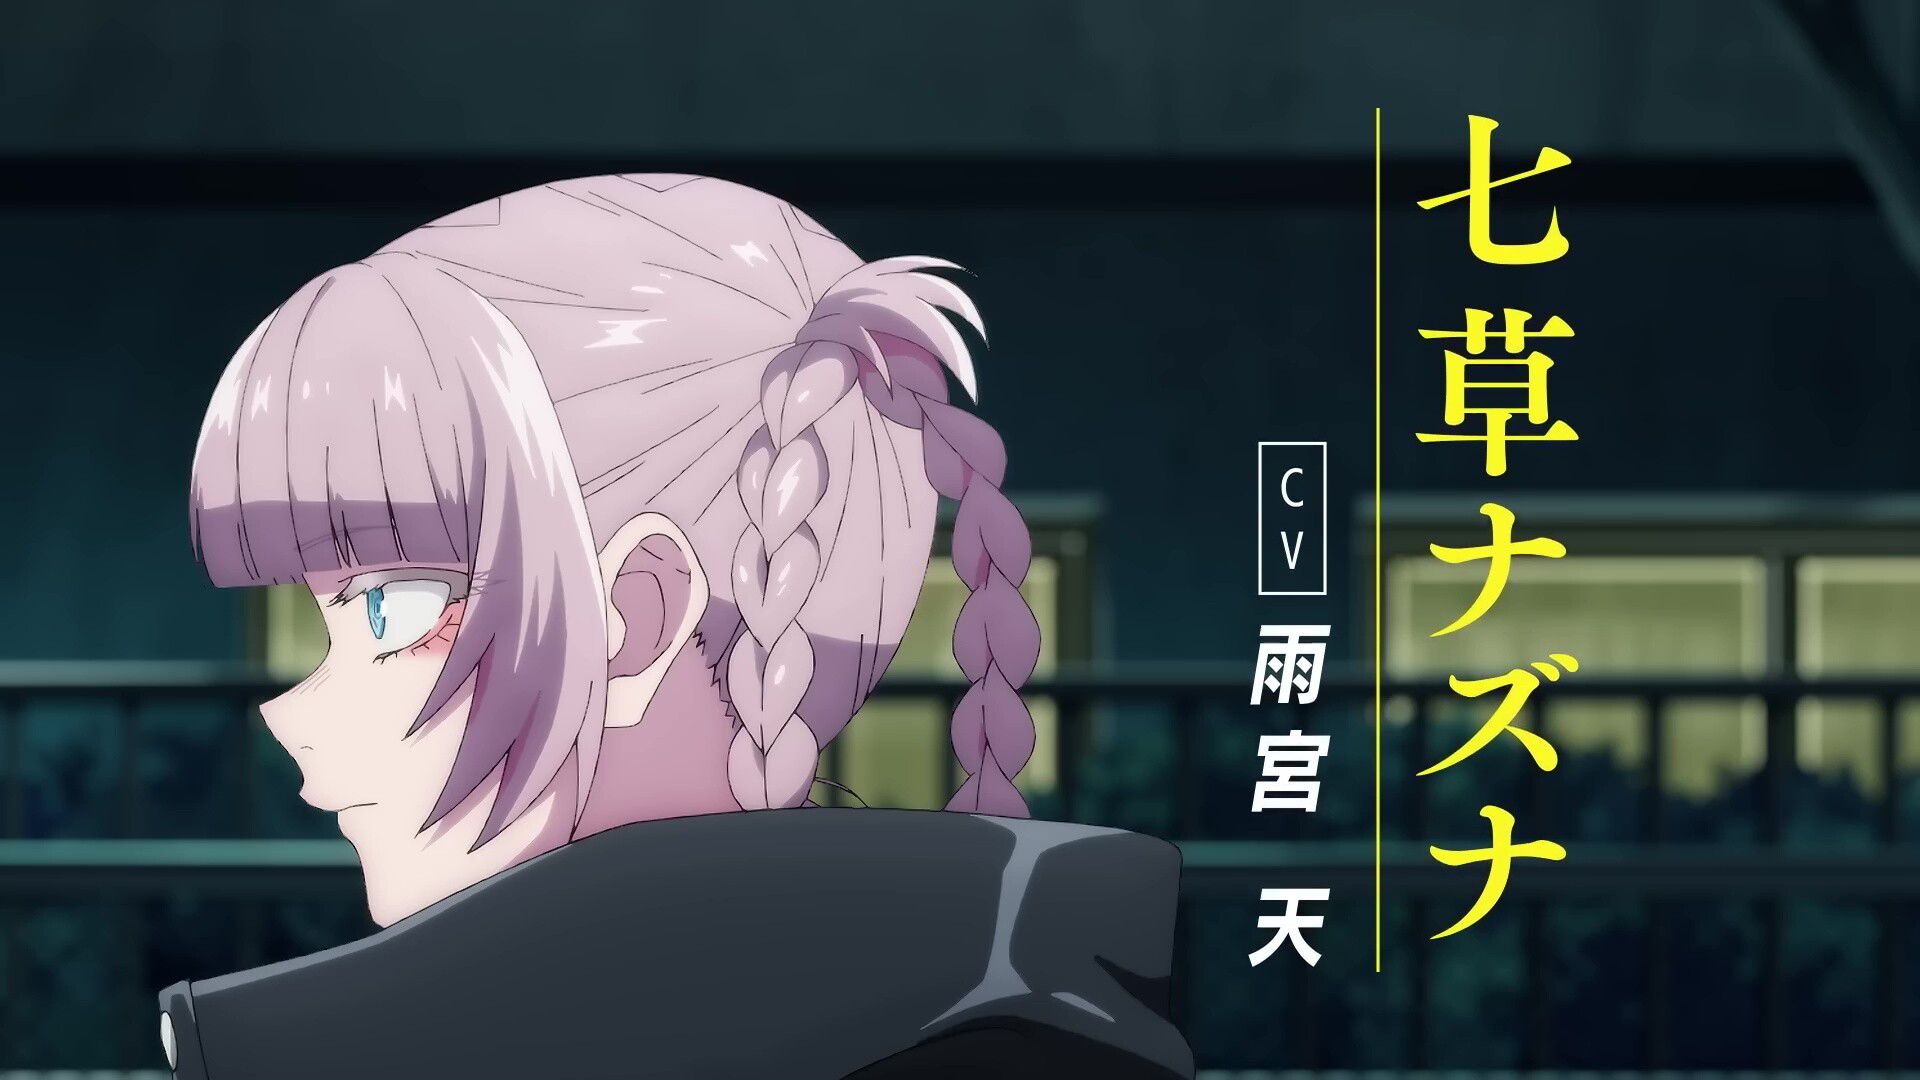 Anime "Yofukashi no Uta" A scene where you yapple with an erotic girl on a futon! Broadcasting starts in July 23